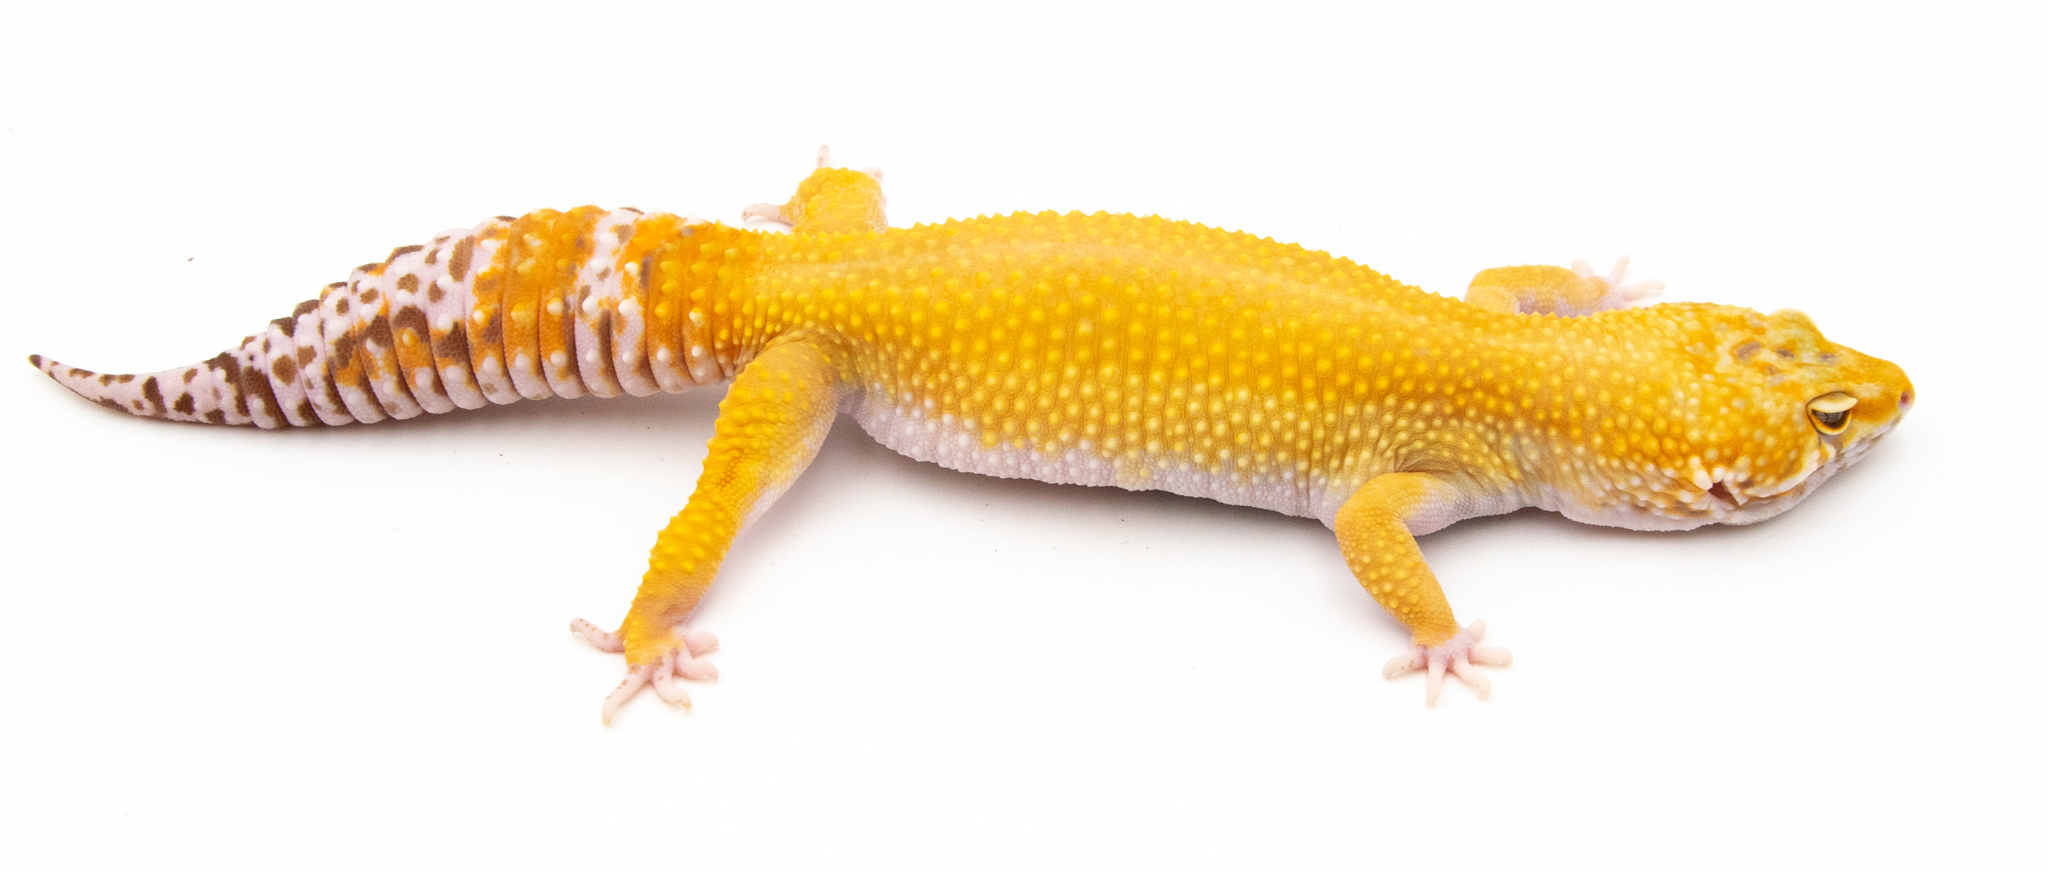 EJ91 - Gecko Léopard - Eublepharis Macularius Tremper het Raptor red Stripe Cross - &#9792; - NC 2021